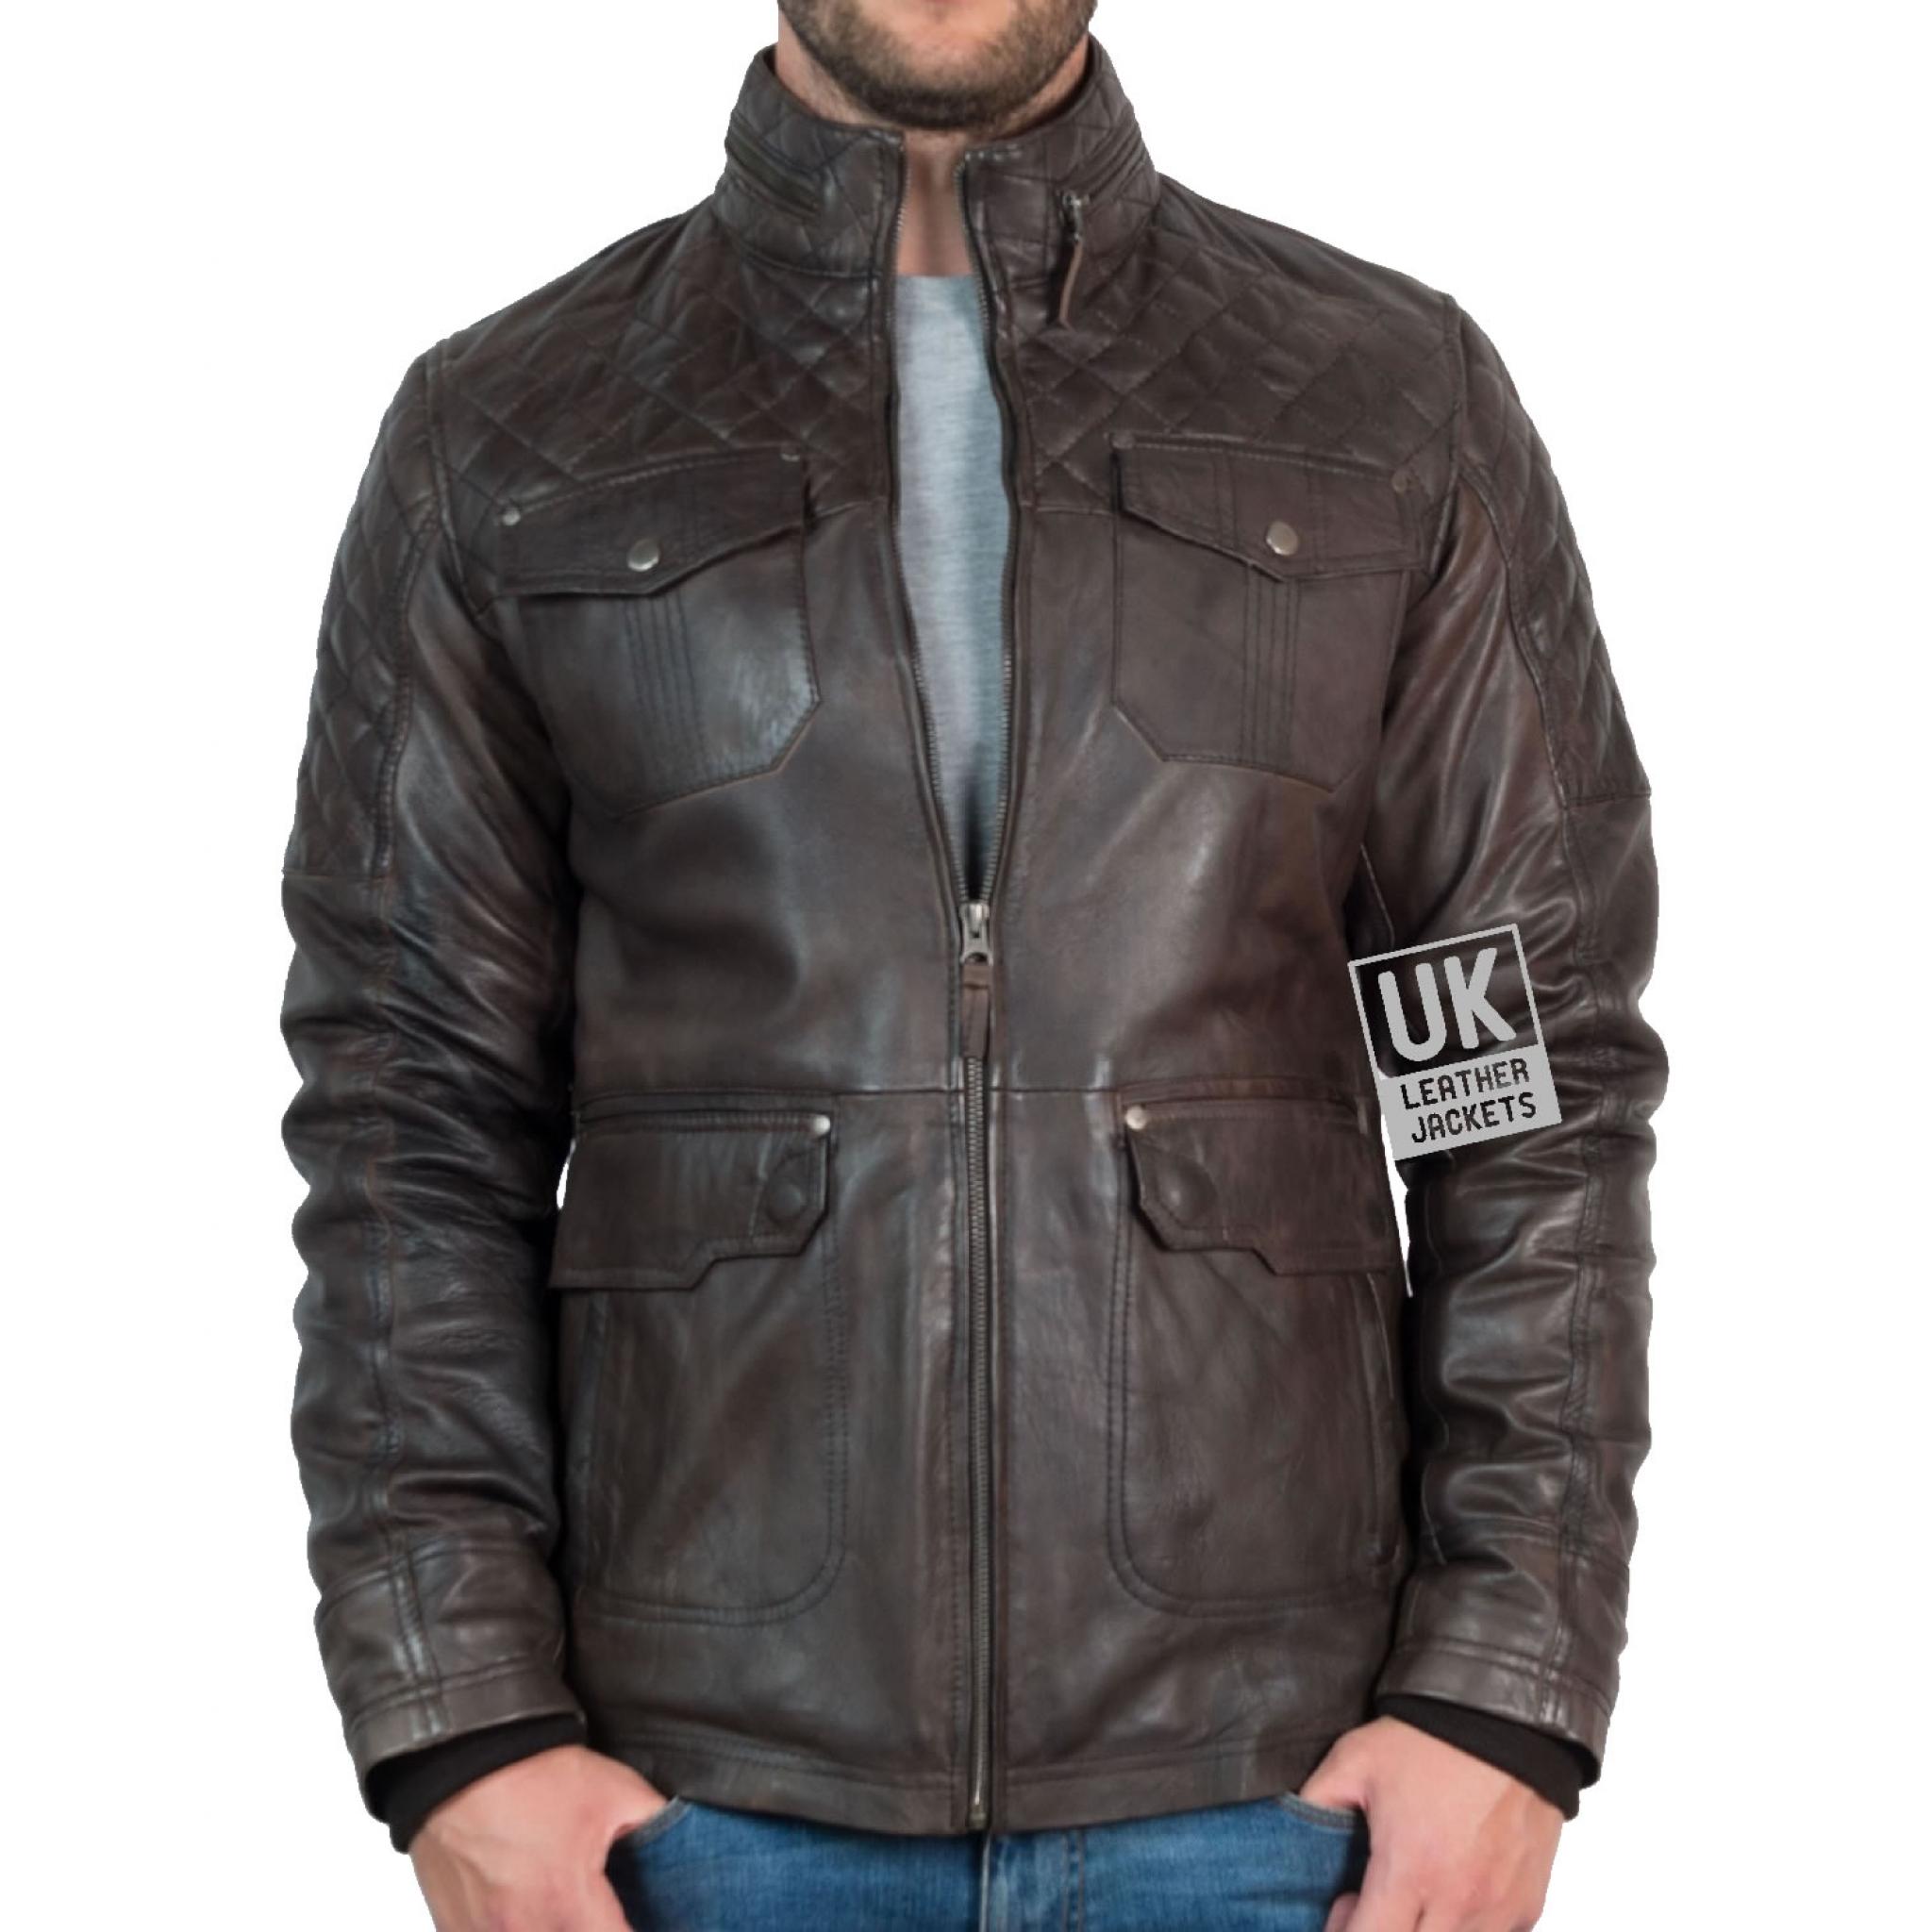 Mens Vintage Racing Leather Jacket - Westland - Brown | UK Leather Jackets